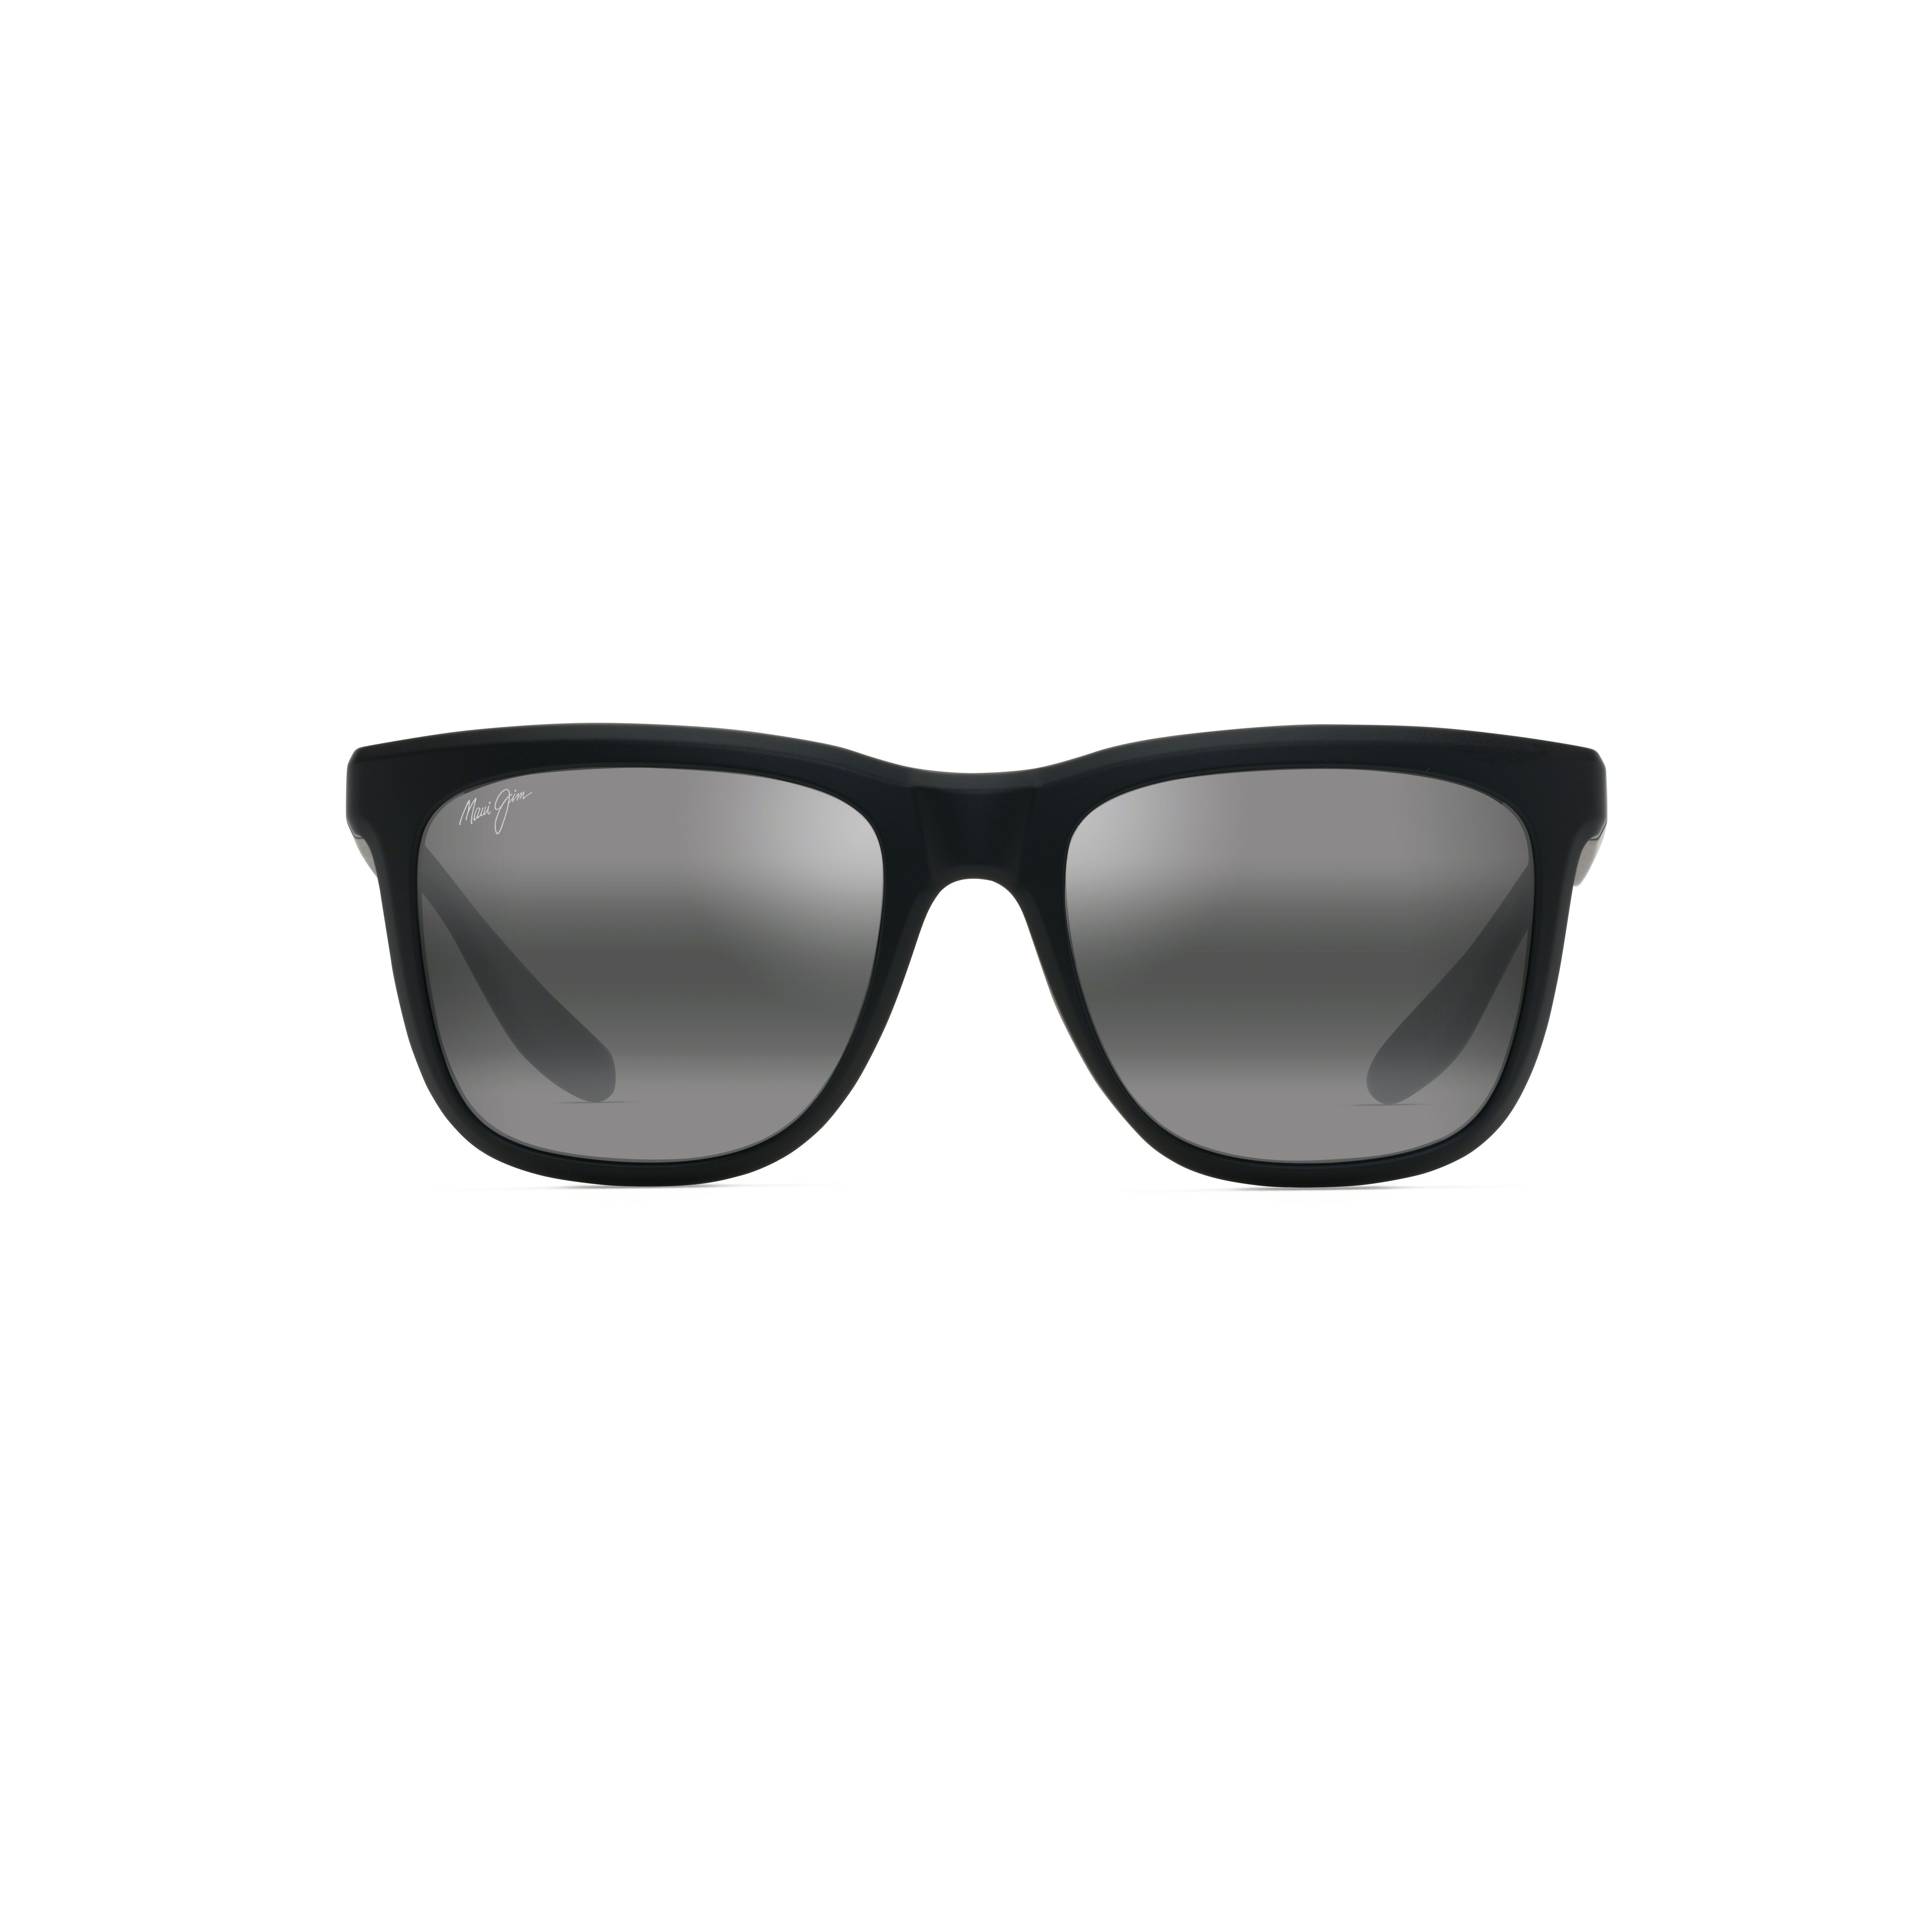 PEHU Square Sunglasses 602-02 - size 55